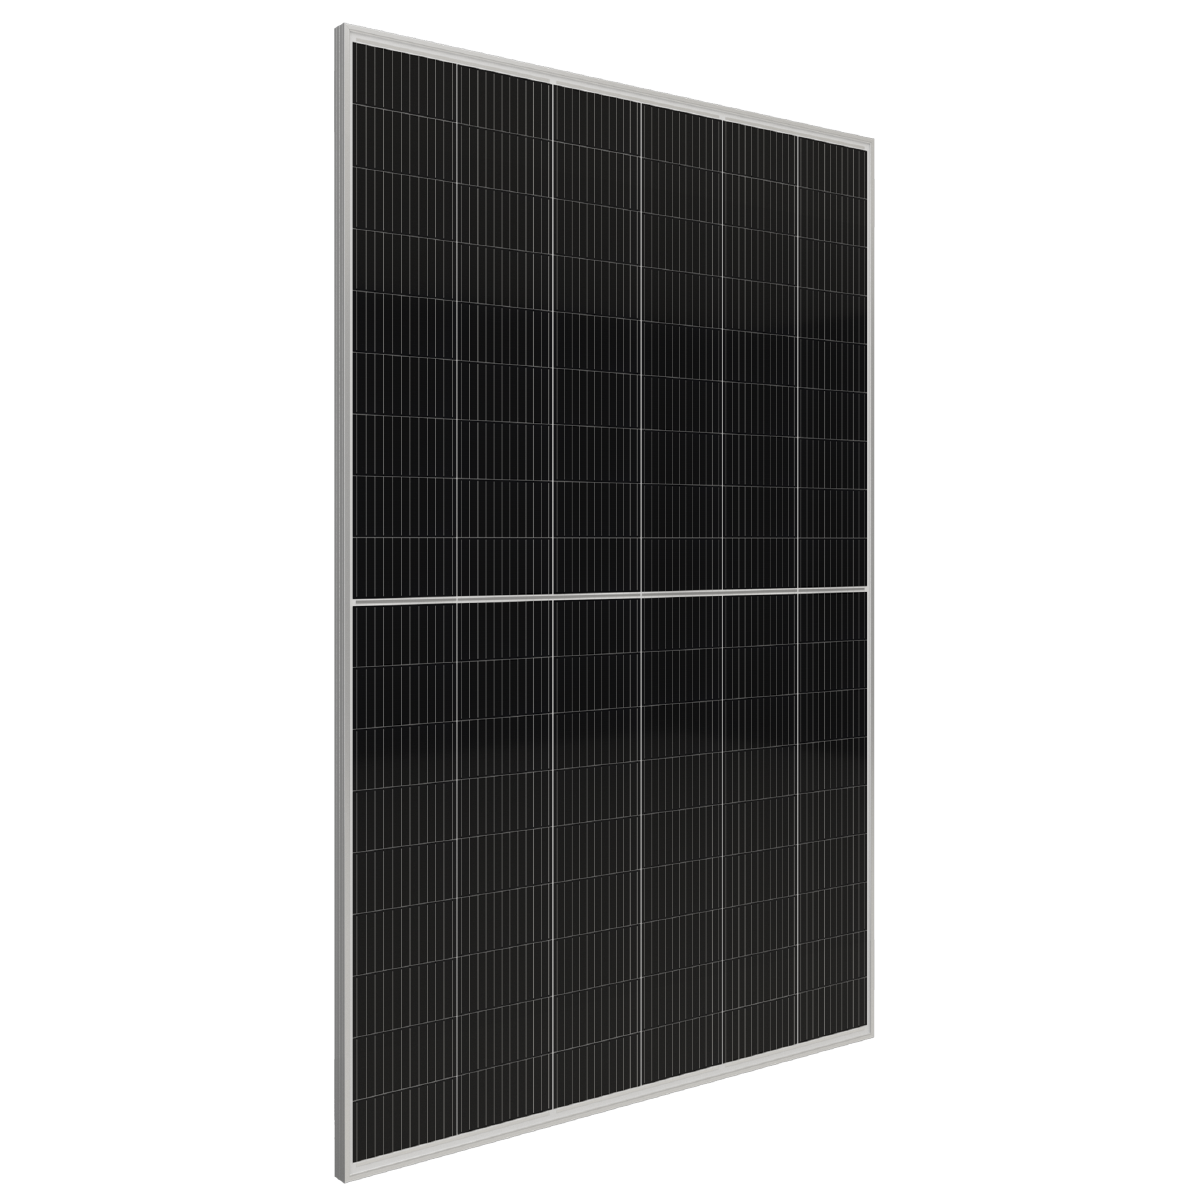 TommaTech 550Wp M12 108PM Cells Half-Cut MB Solar Panel